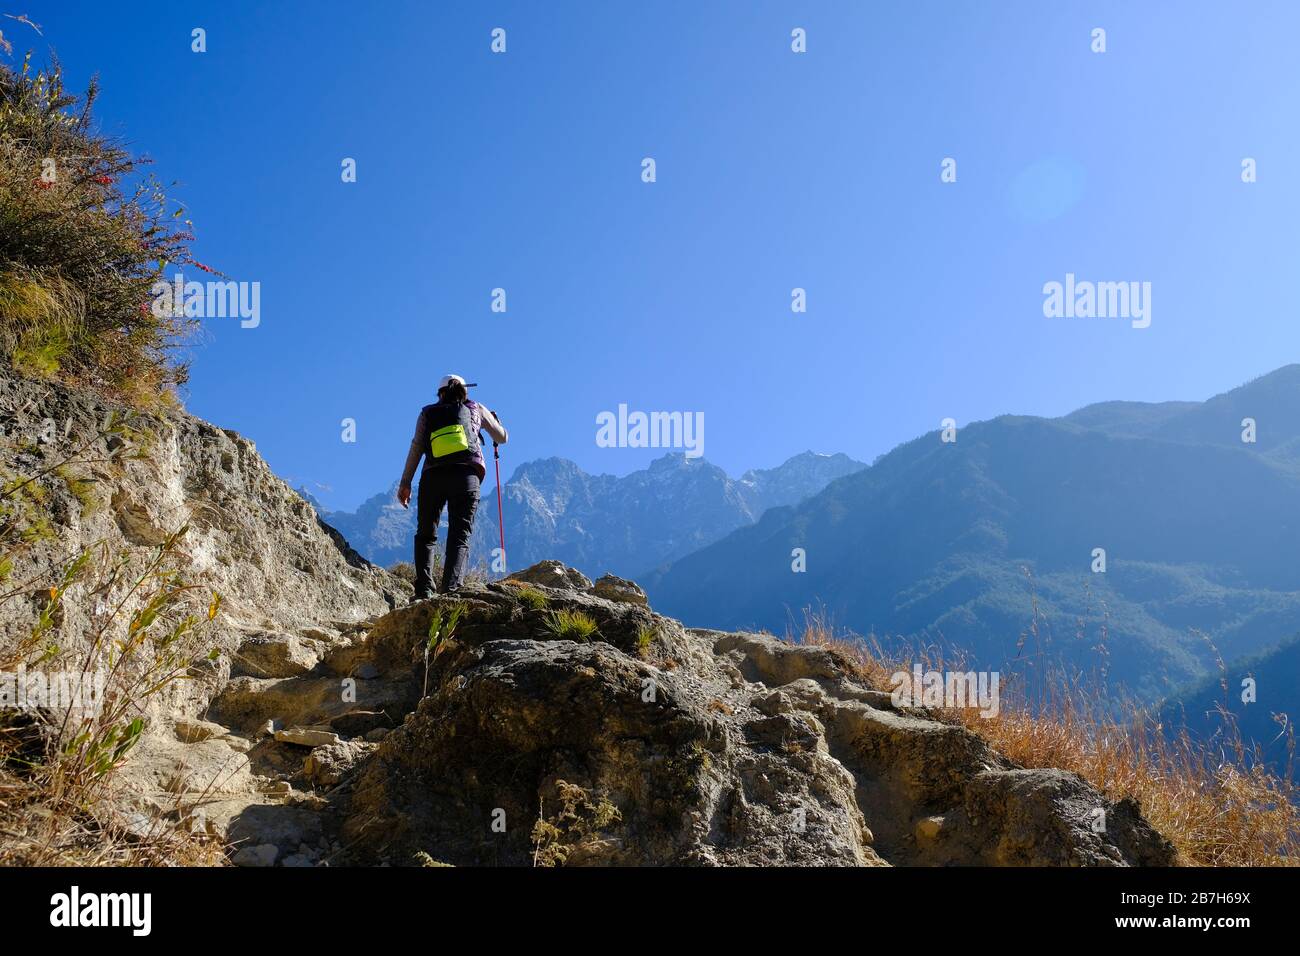 Trekker hiking with trekking pole on the mountain in Yunnan, China. Stock Photo